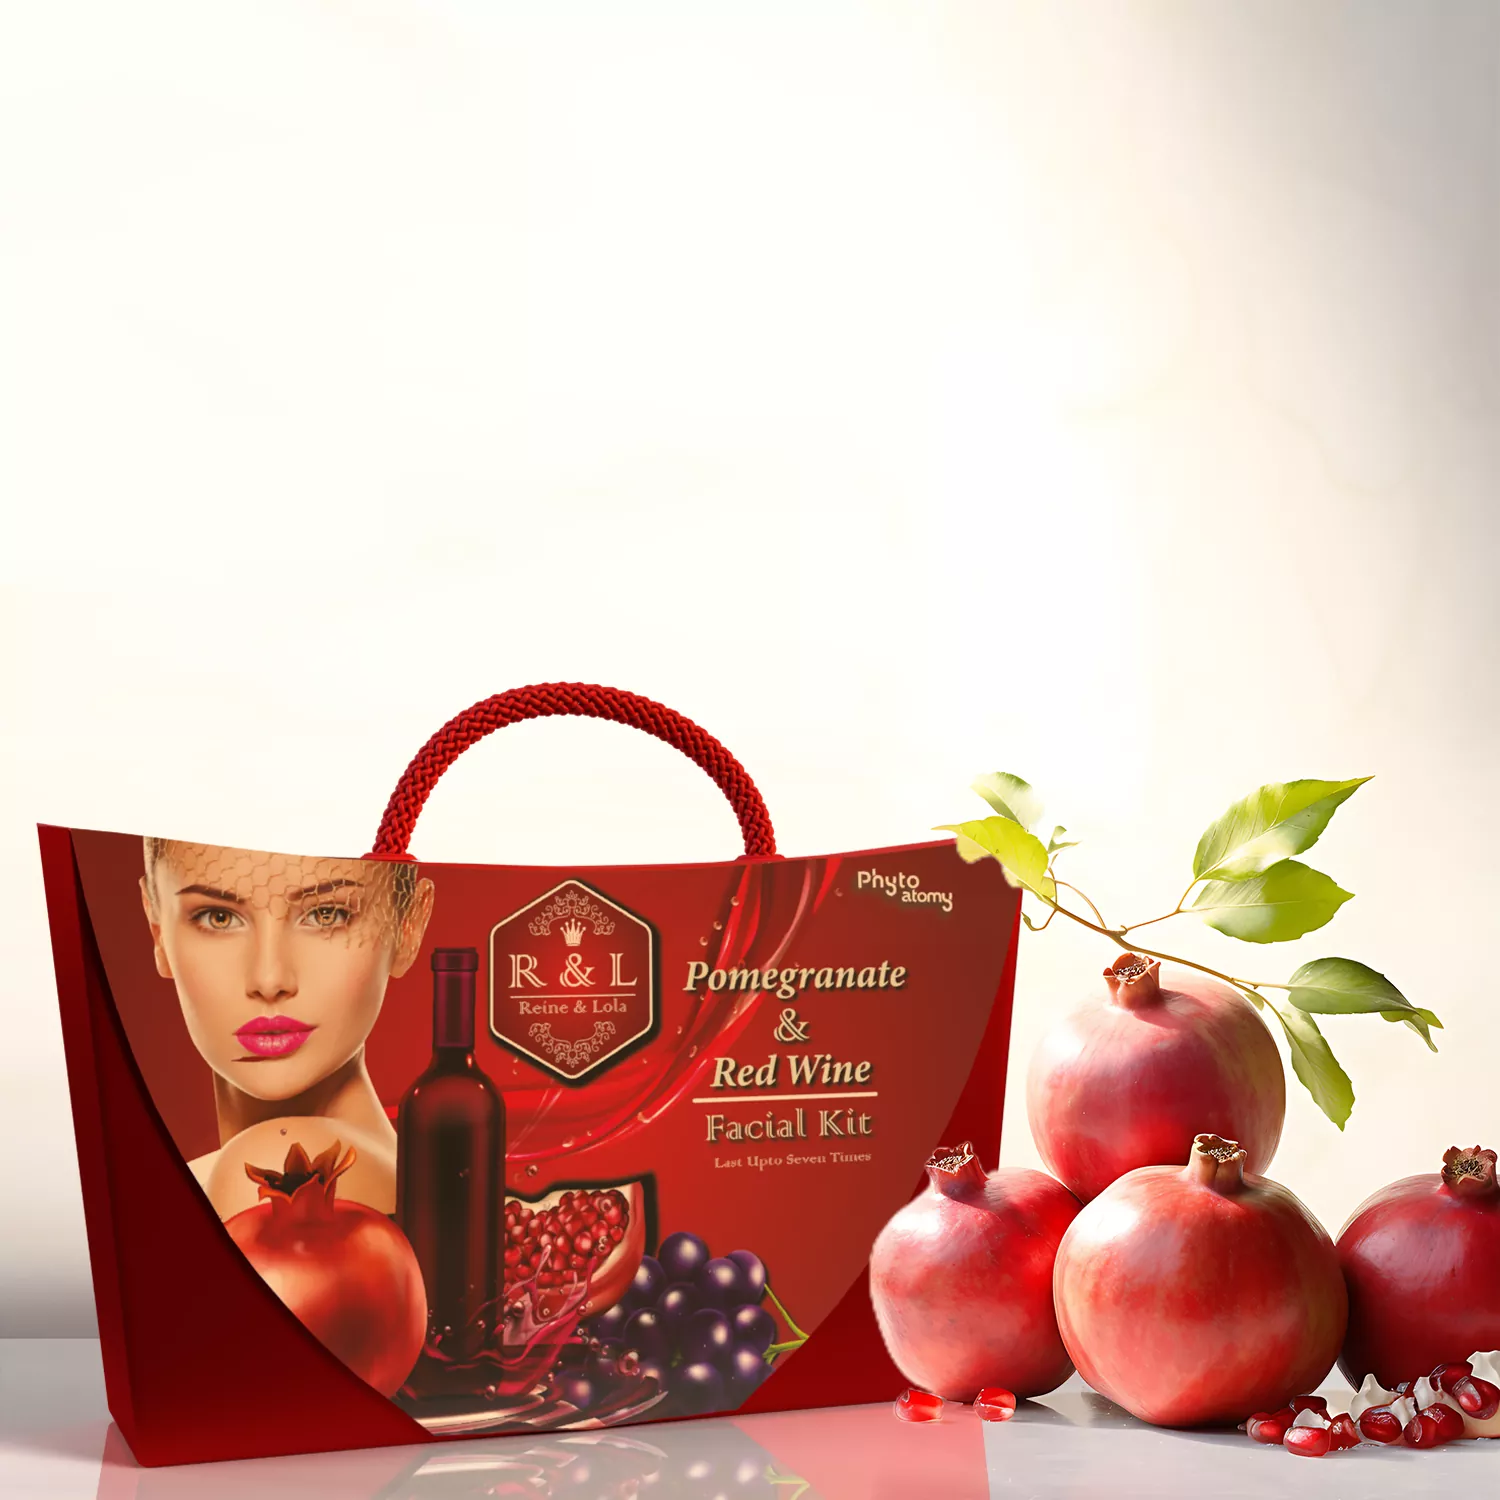 R & L Pomegranate & Red Wine Facial Kit